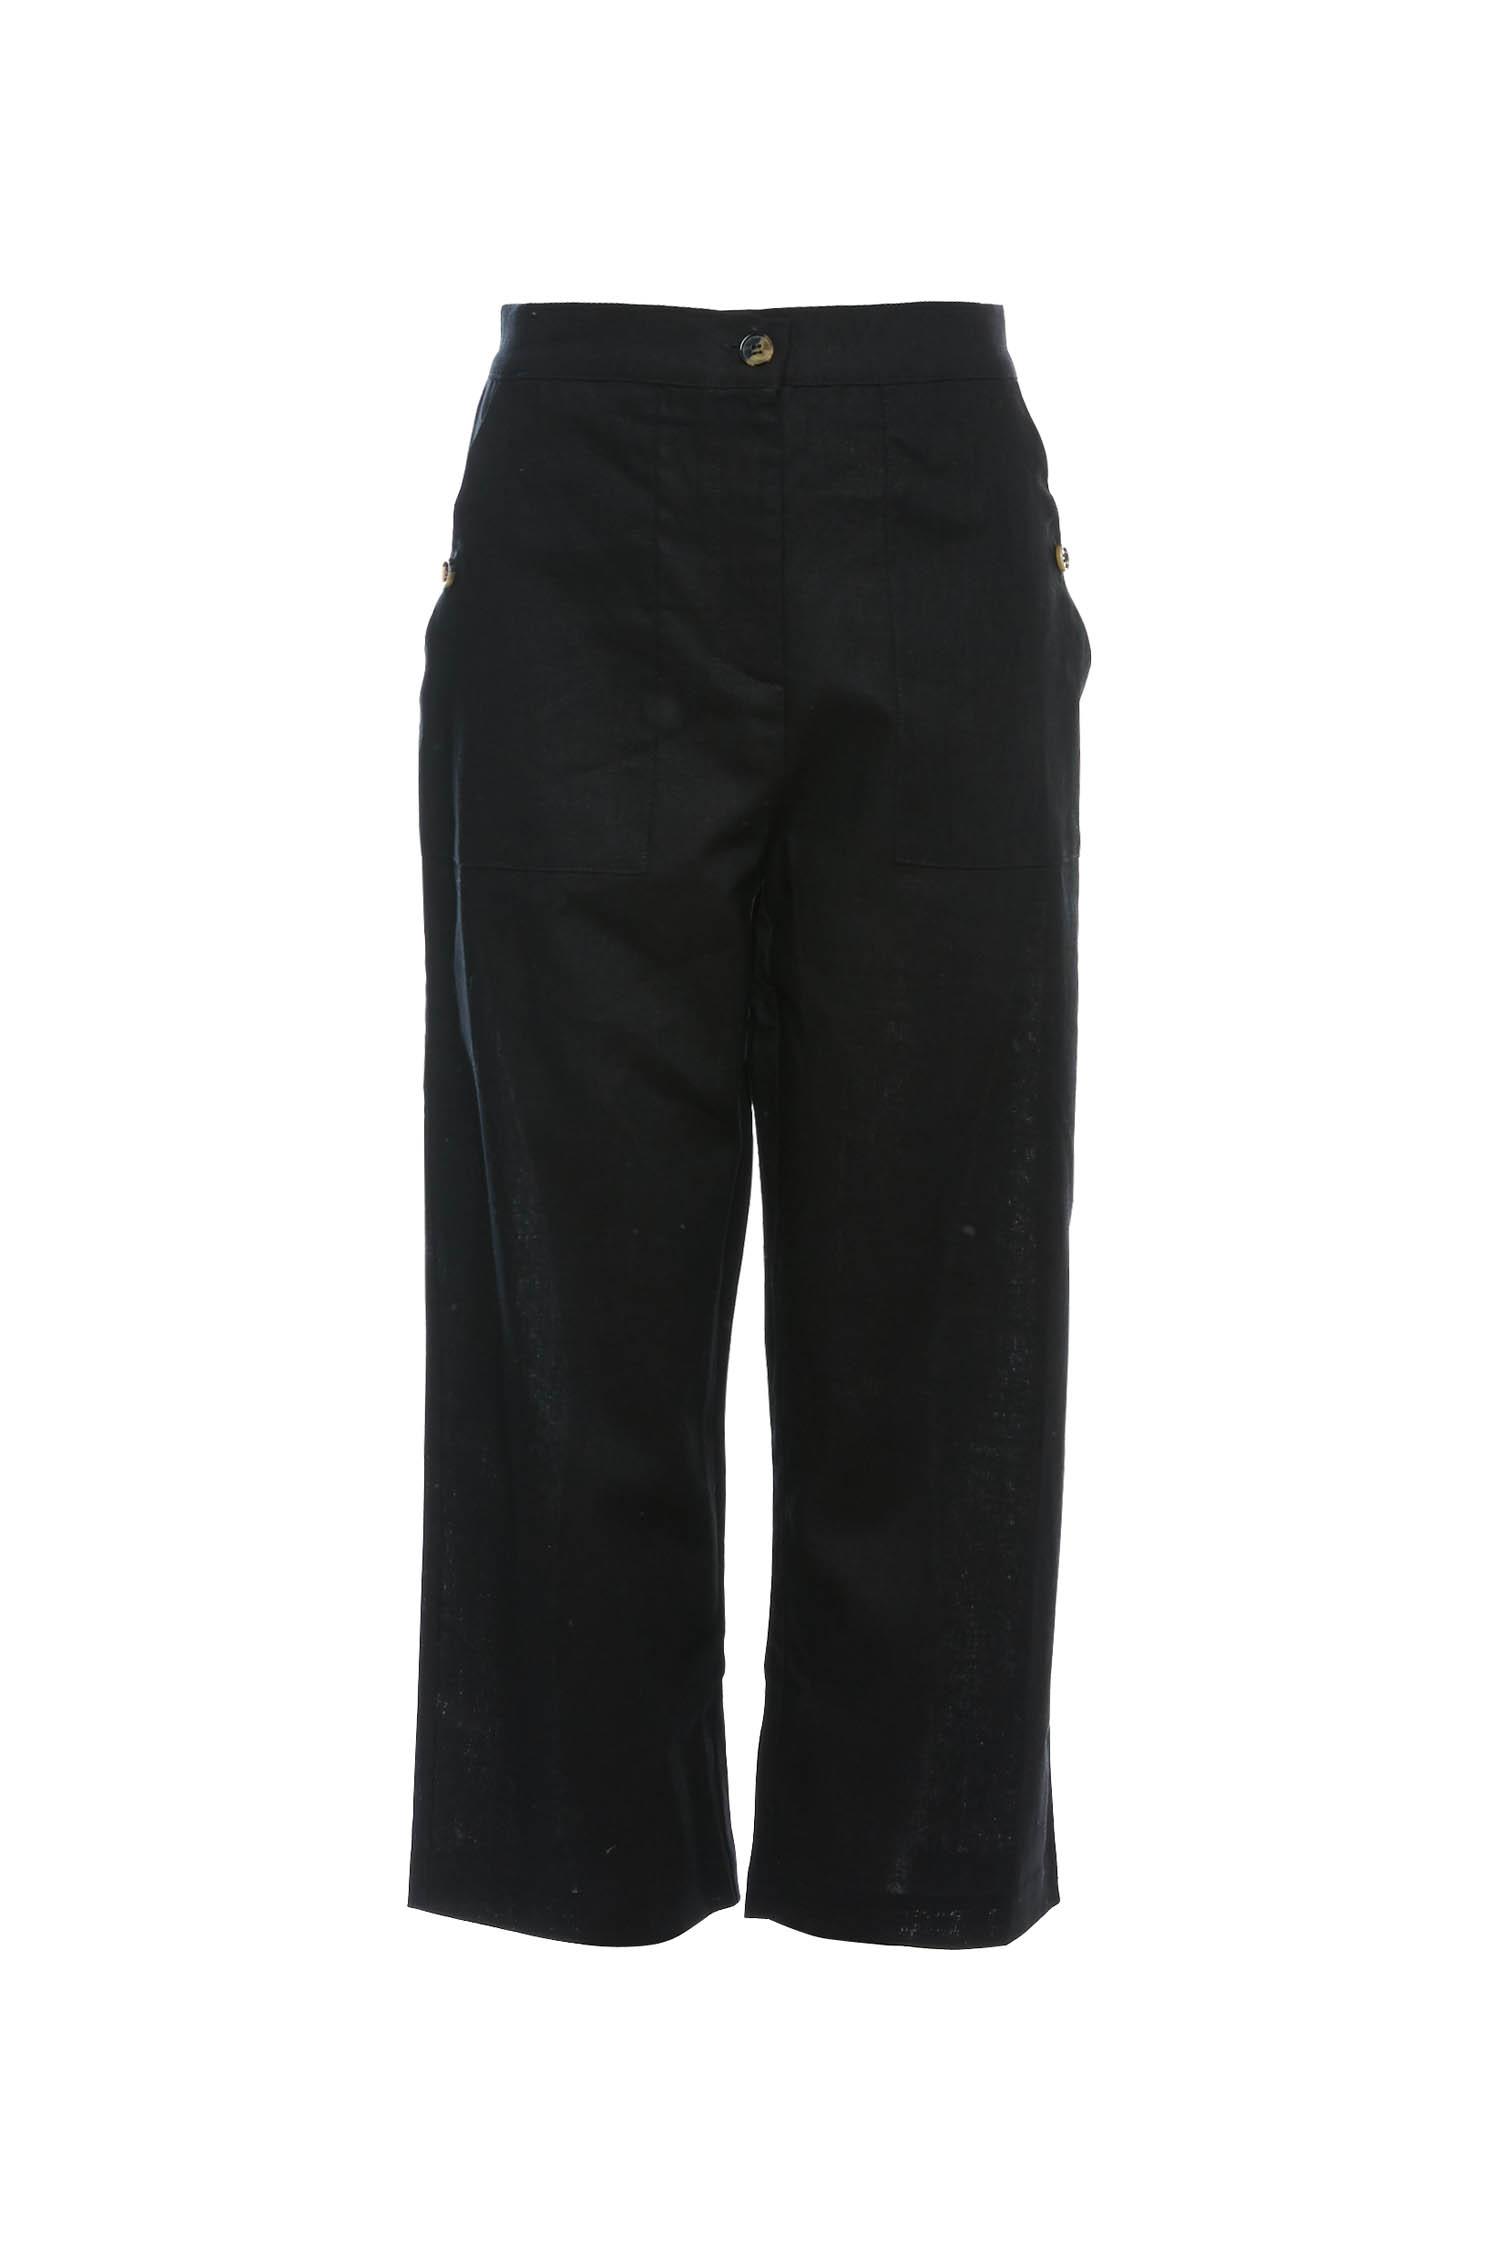 Mod Ref Cropped Linen Pants in Black S | DAILYLOOK